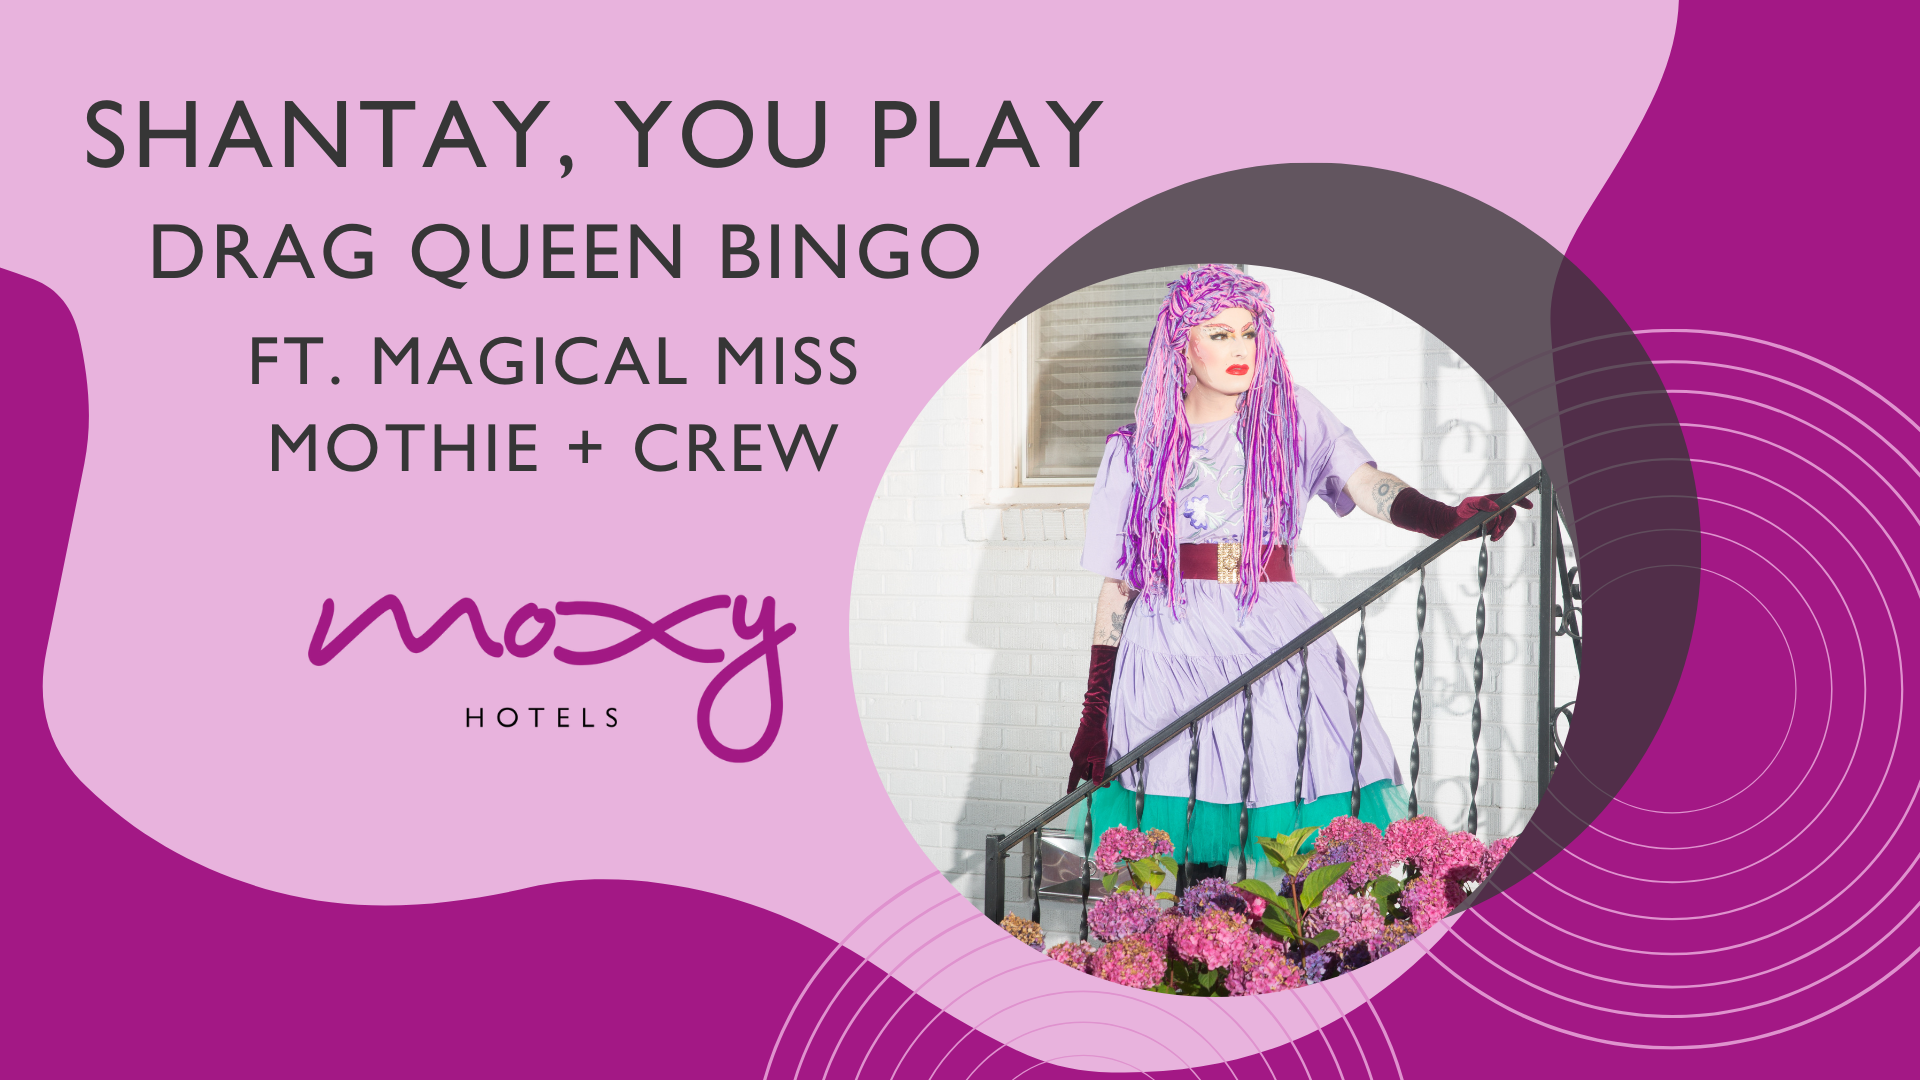 Shantay You Play Drag Queen Bingo at Moxy graphic